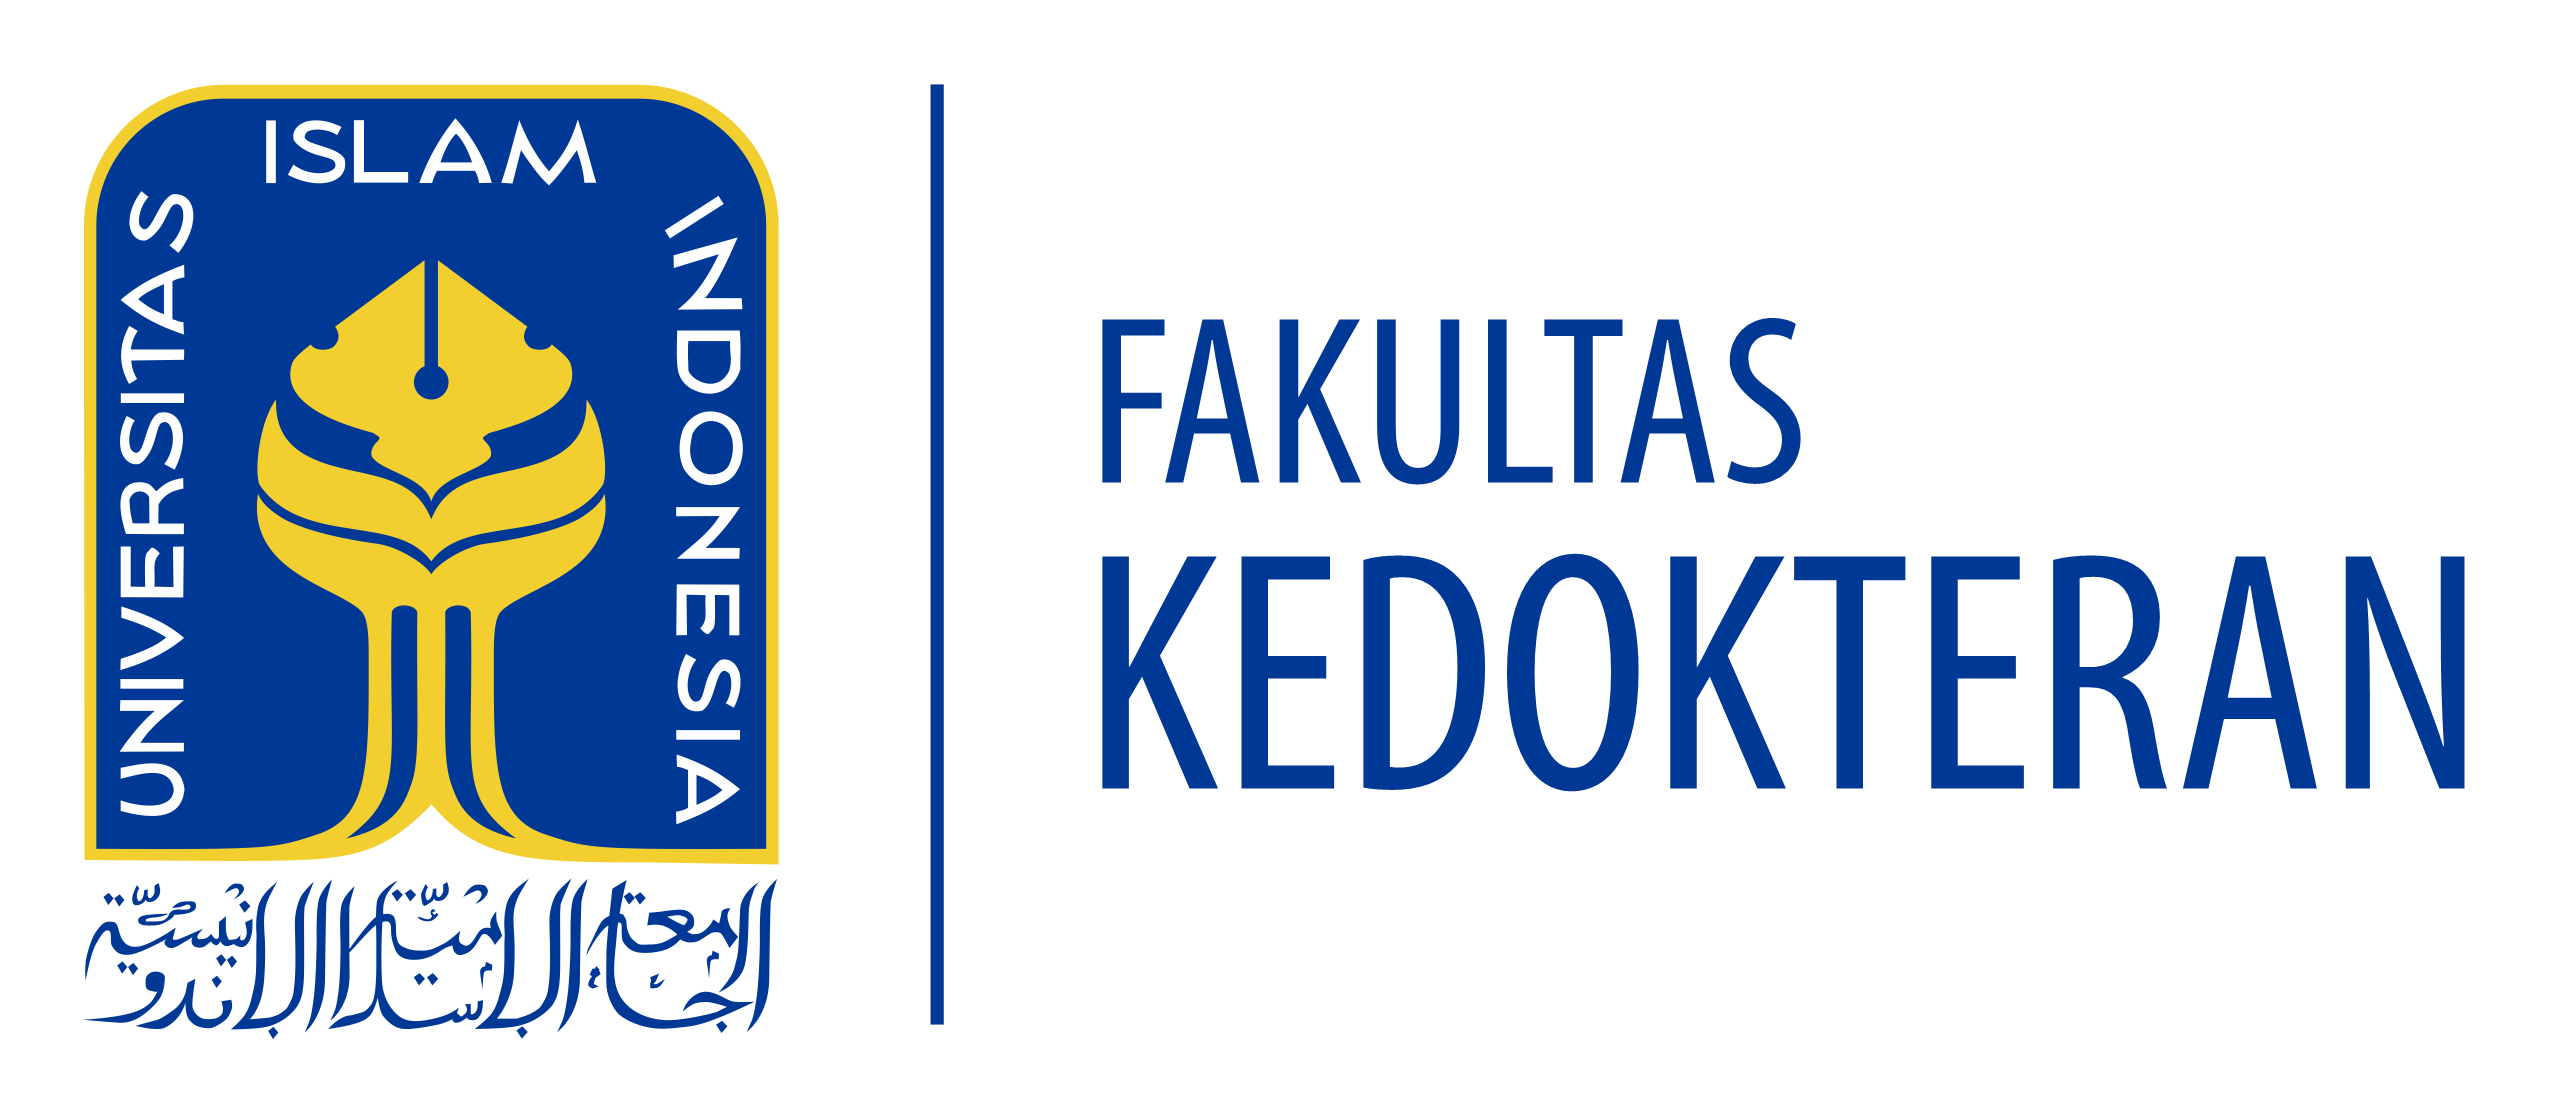 Logo FK